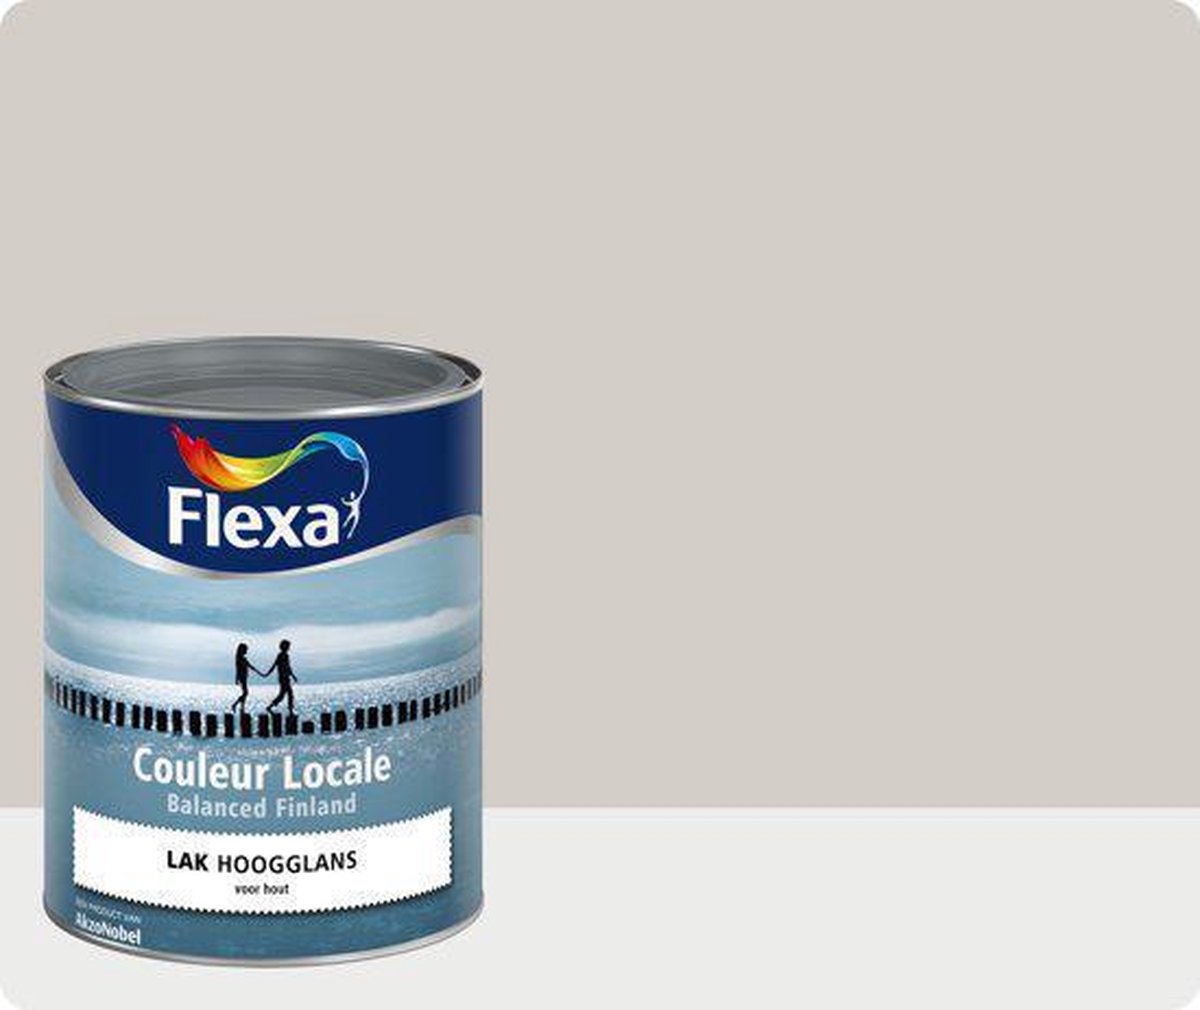 Flexa Couleur Locale - Lak Hoogglans - Balanced Finland Cliff - 7505 - 0,75 liter